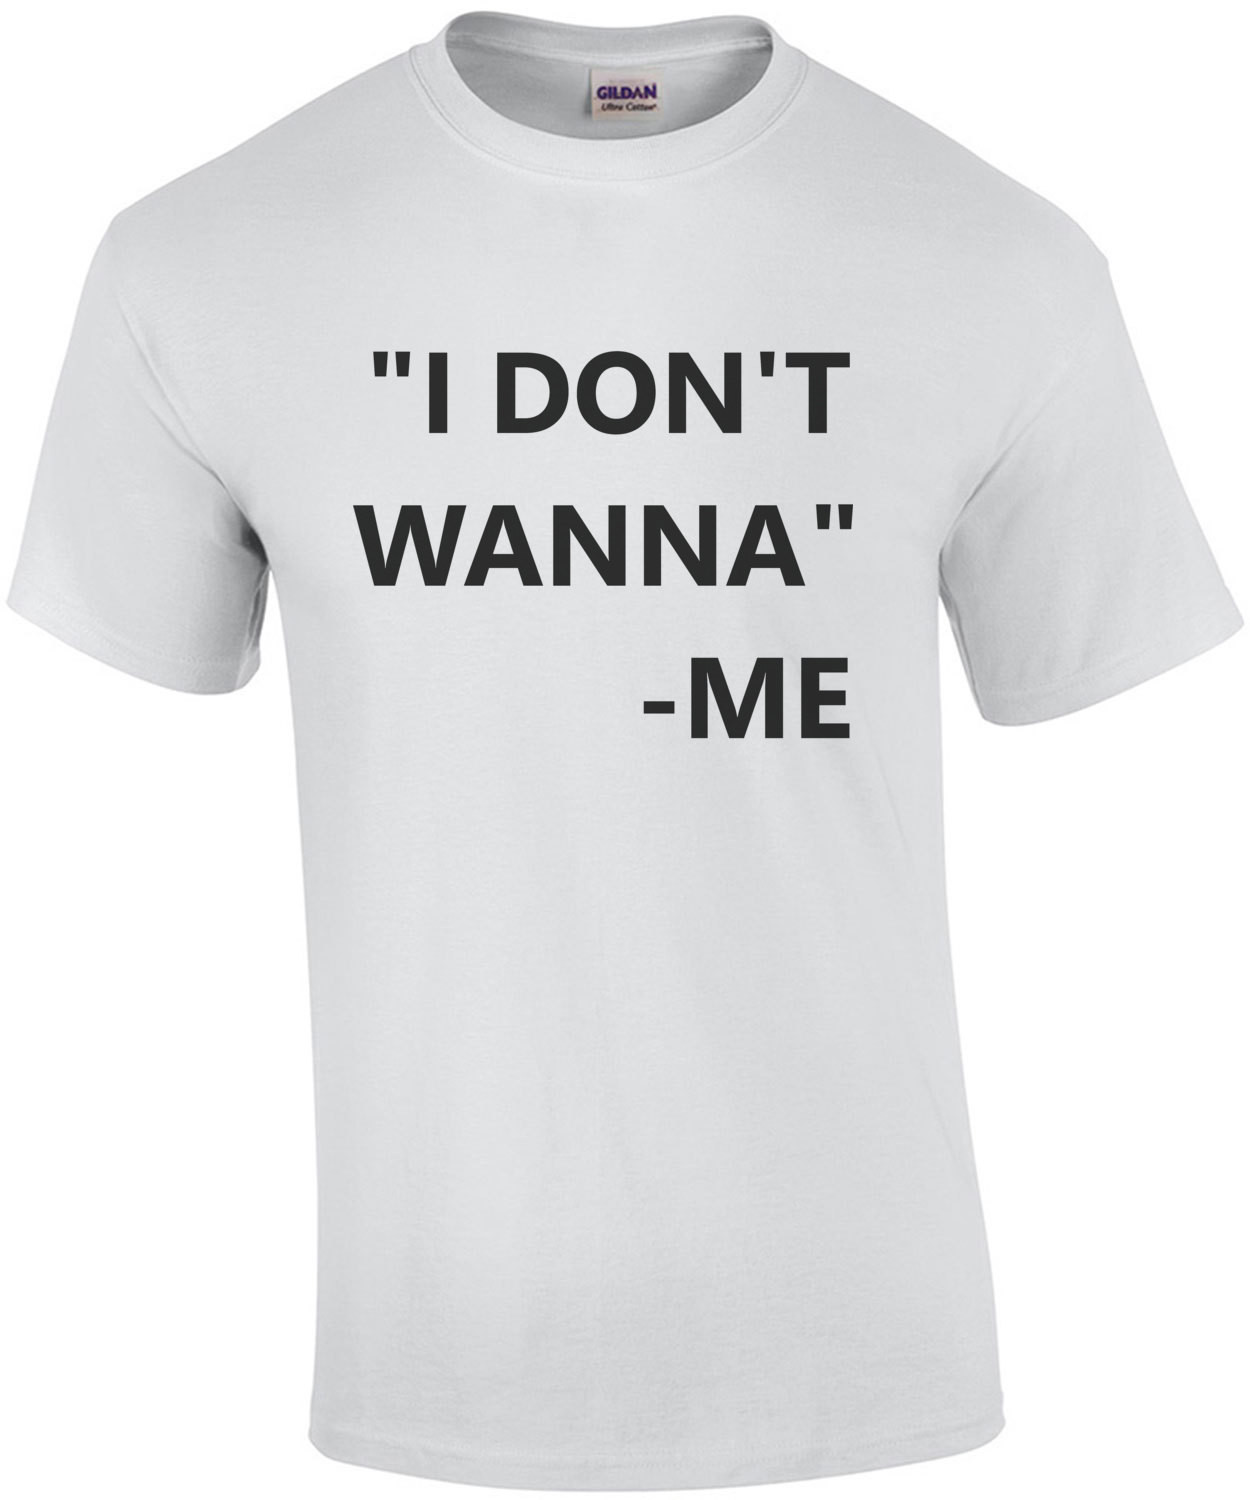 I don't wanna - me - Funny T-Shirt